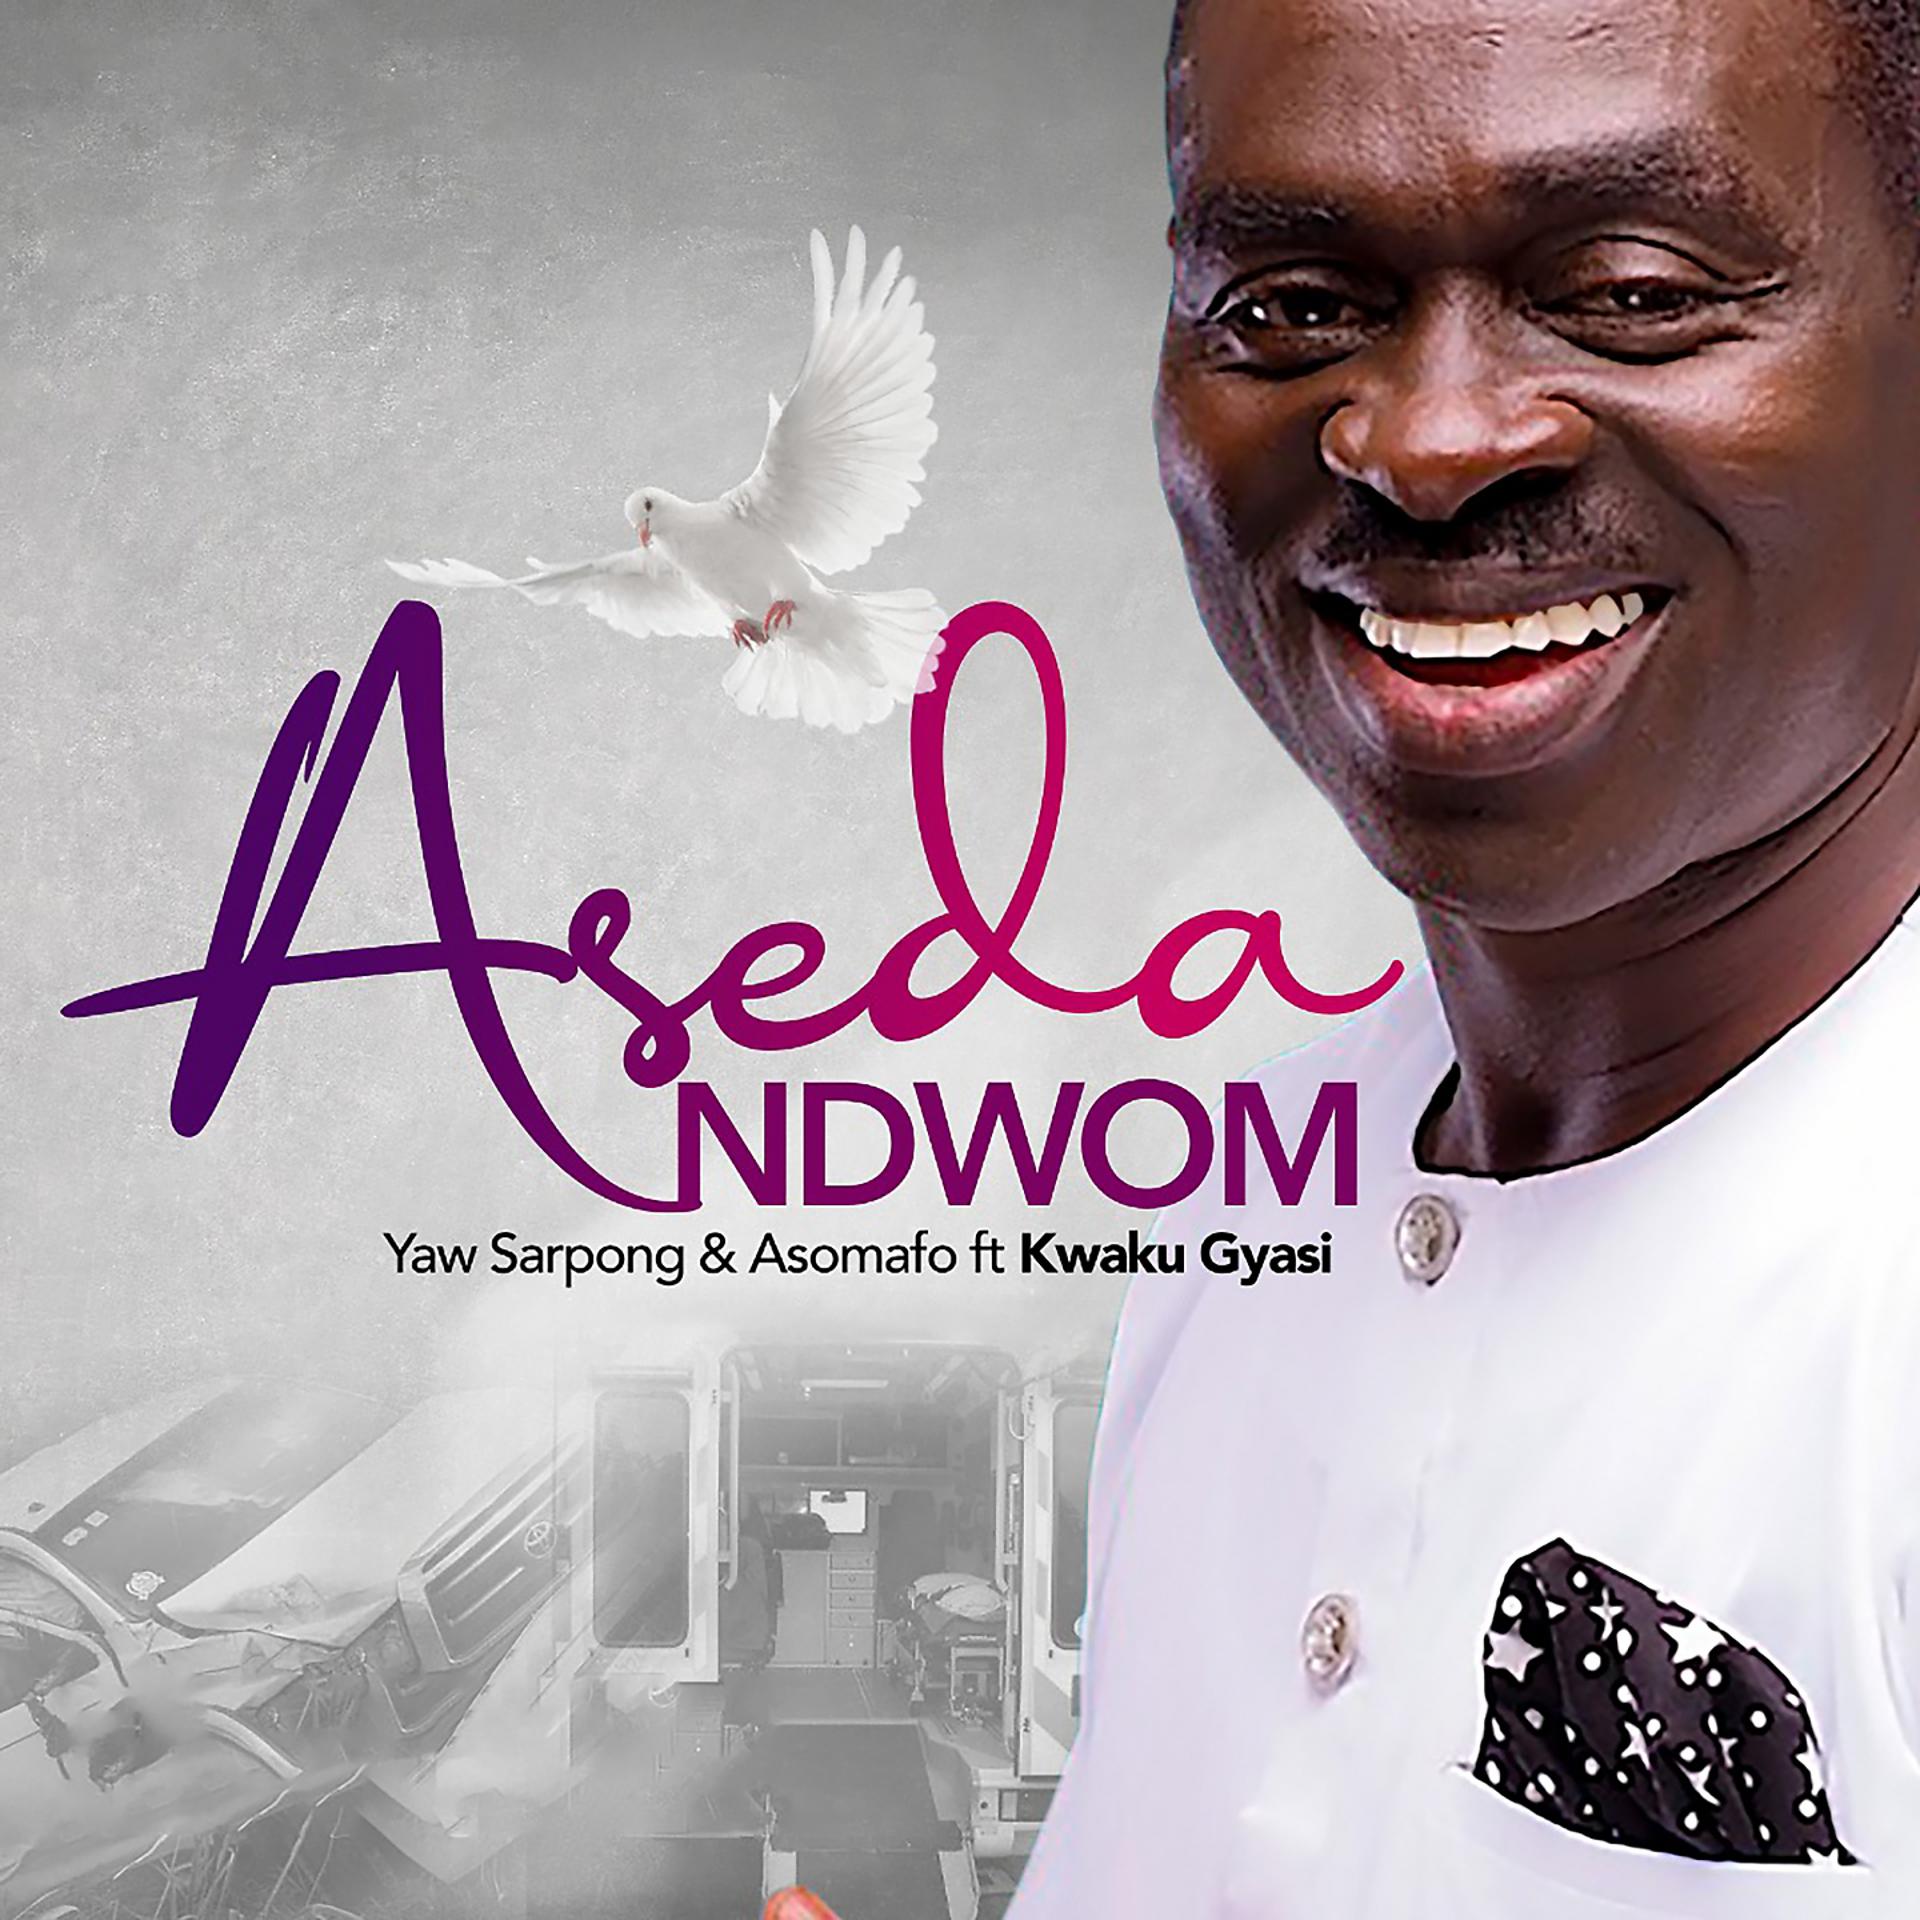 Постер альбома Aseda Ndwom